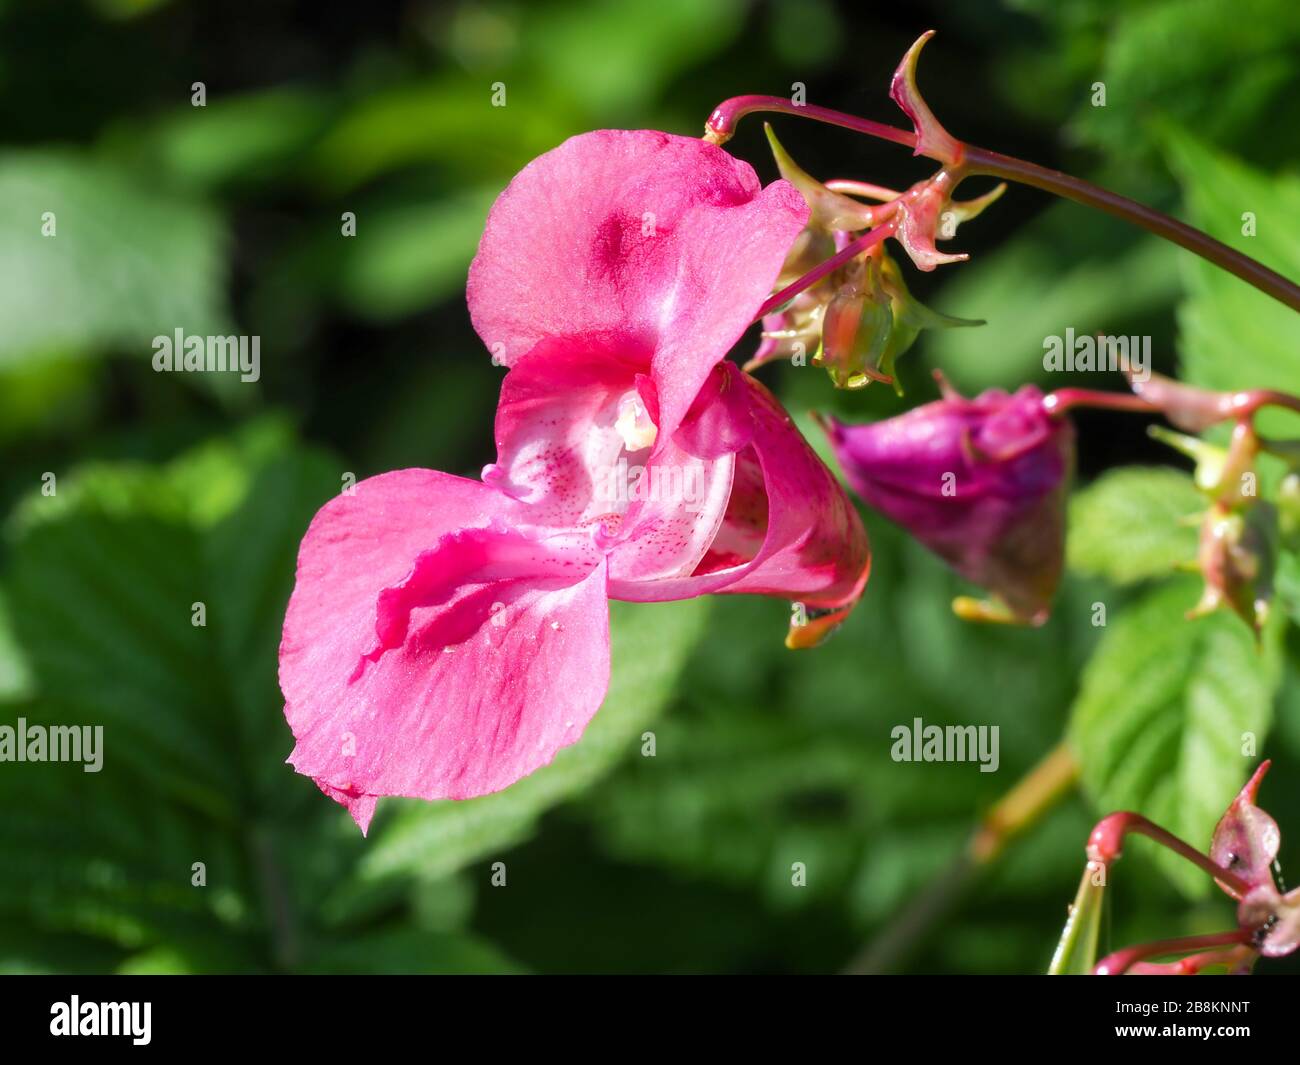 Beautiful pink flower of the invasive species Himalayan balsam, Impatiens glandulifera Stock Photo